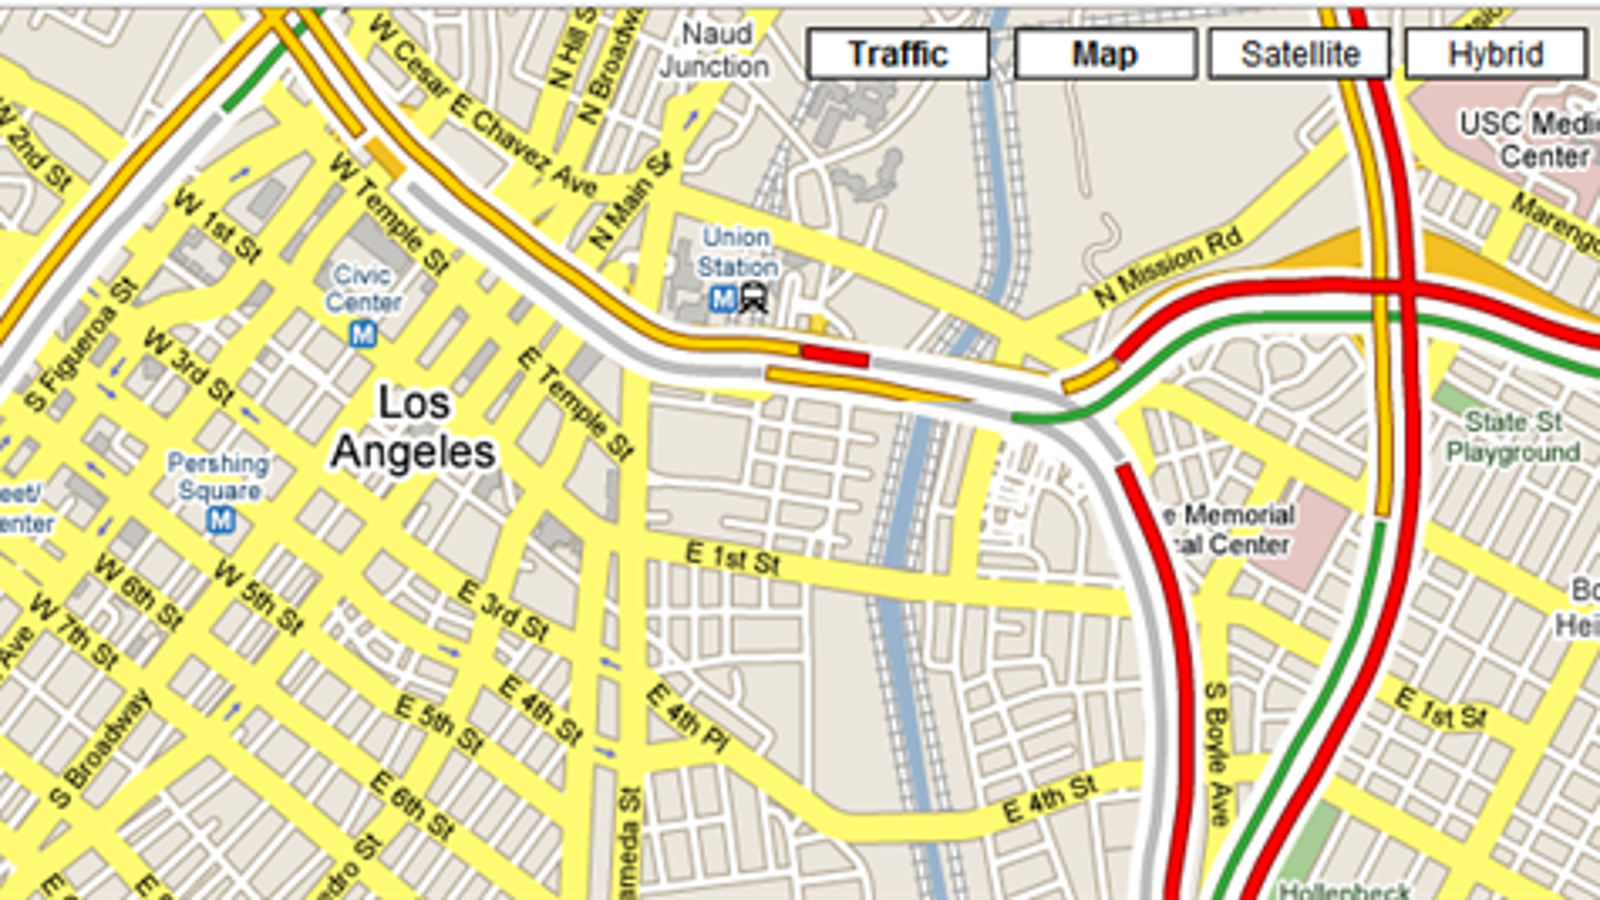 google maps traffic speed colors